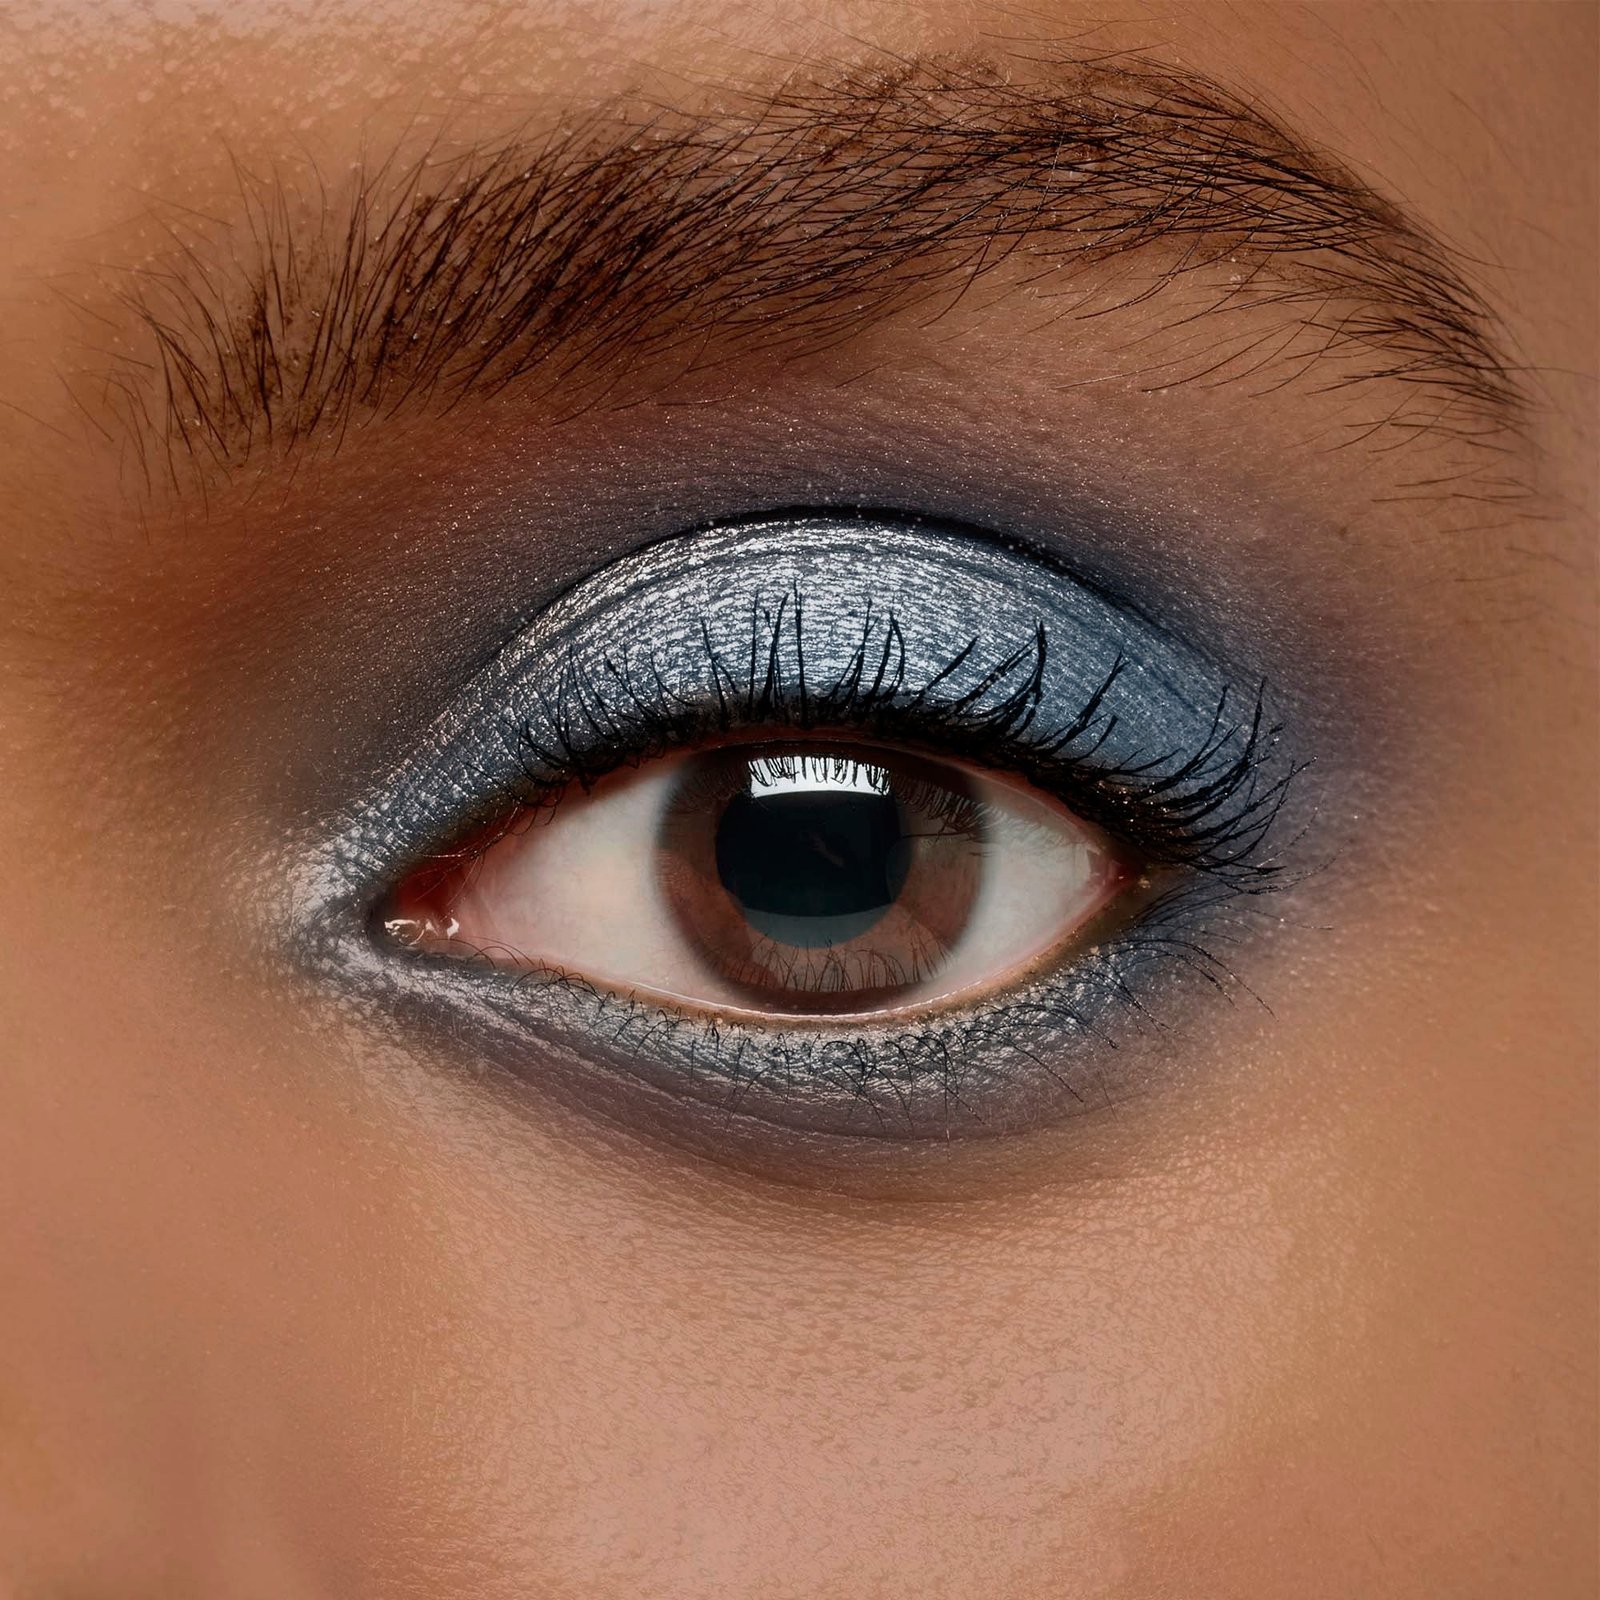 IsaDora Single Power Eyeshadow 20 Starry Blue 2,2 g